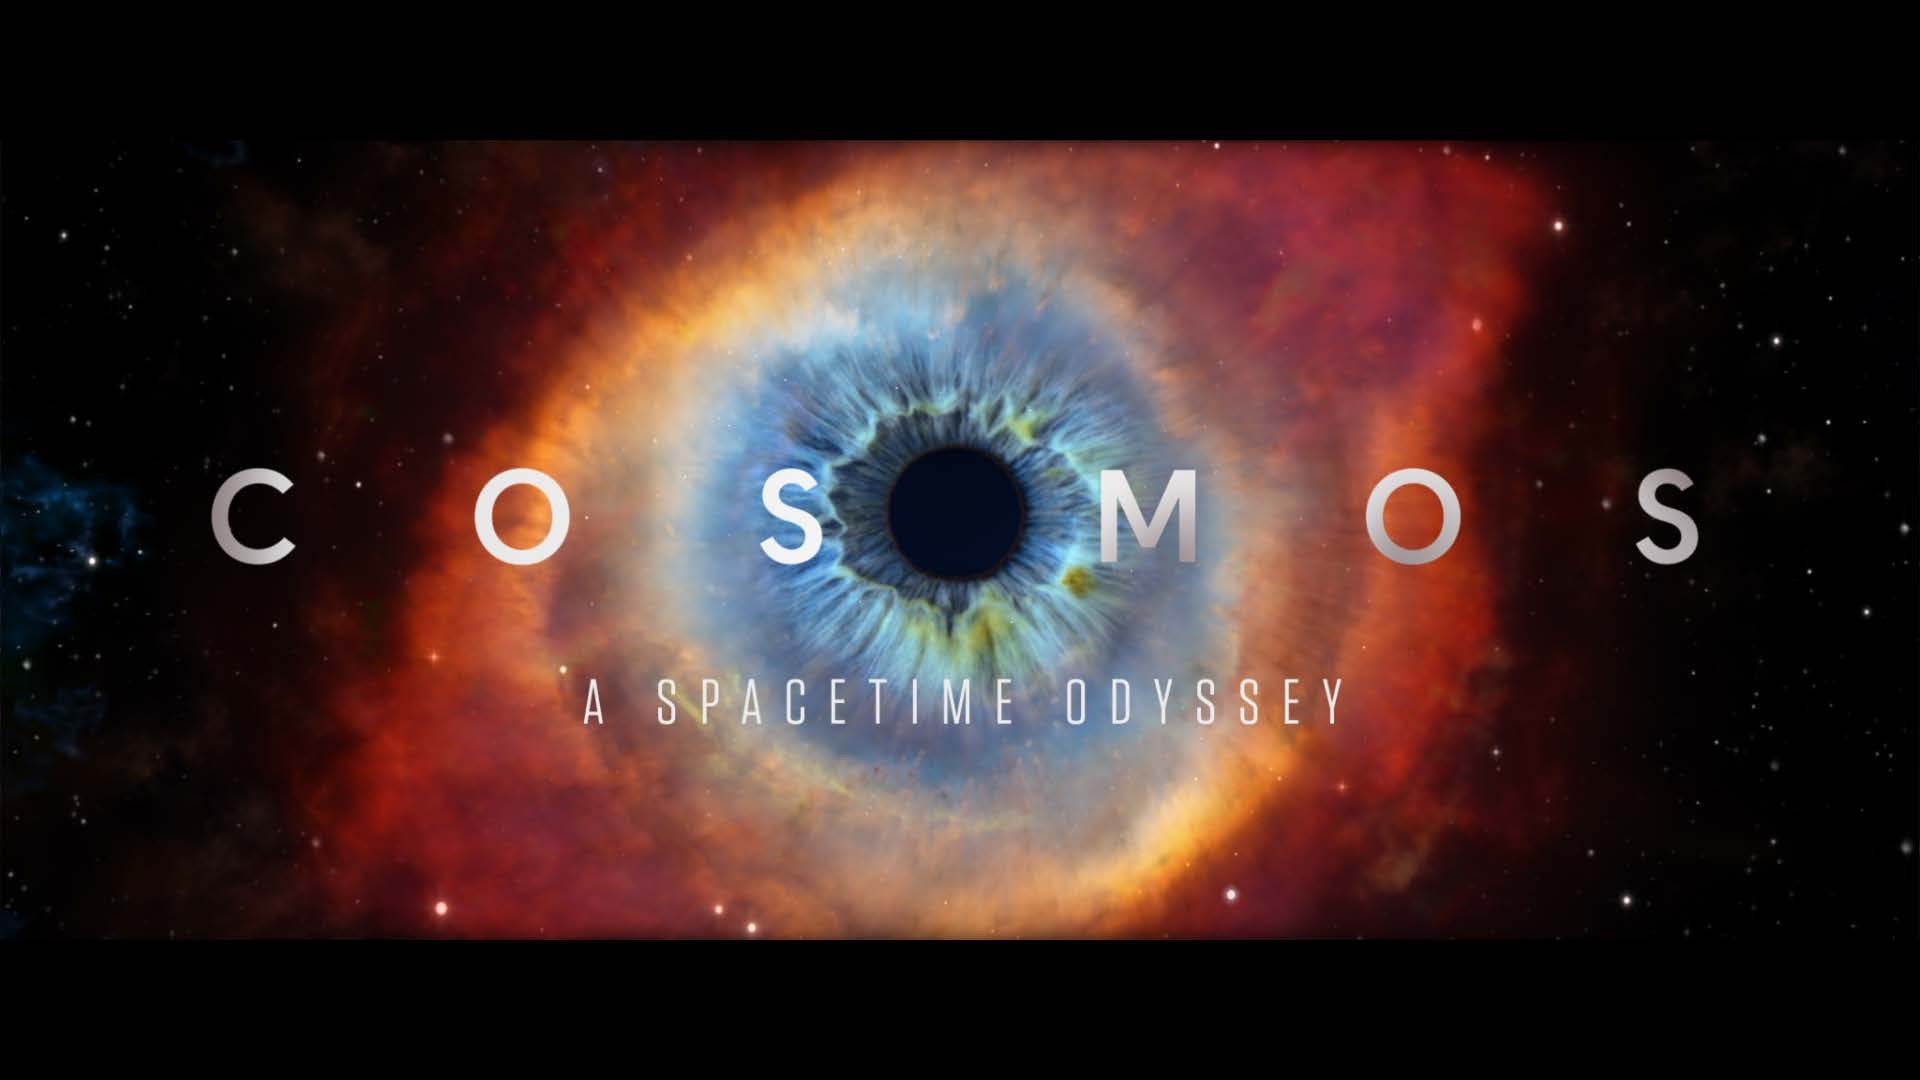 Cosmos eye in the sky logo opening